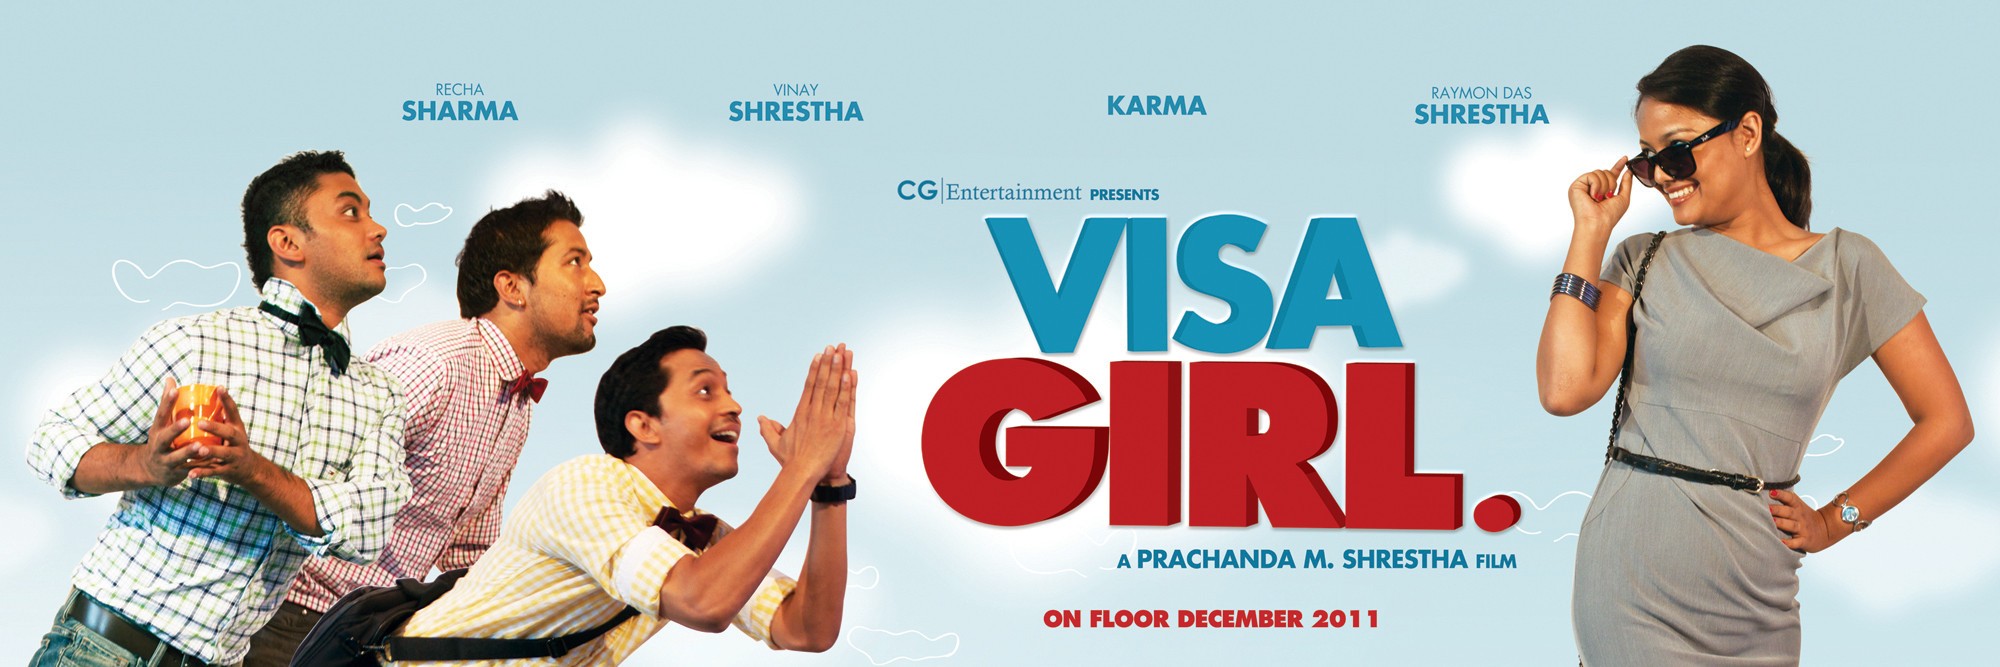 Mega Sized Movie Poster Image for Visa Girl (#3 of 11)